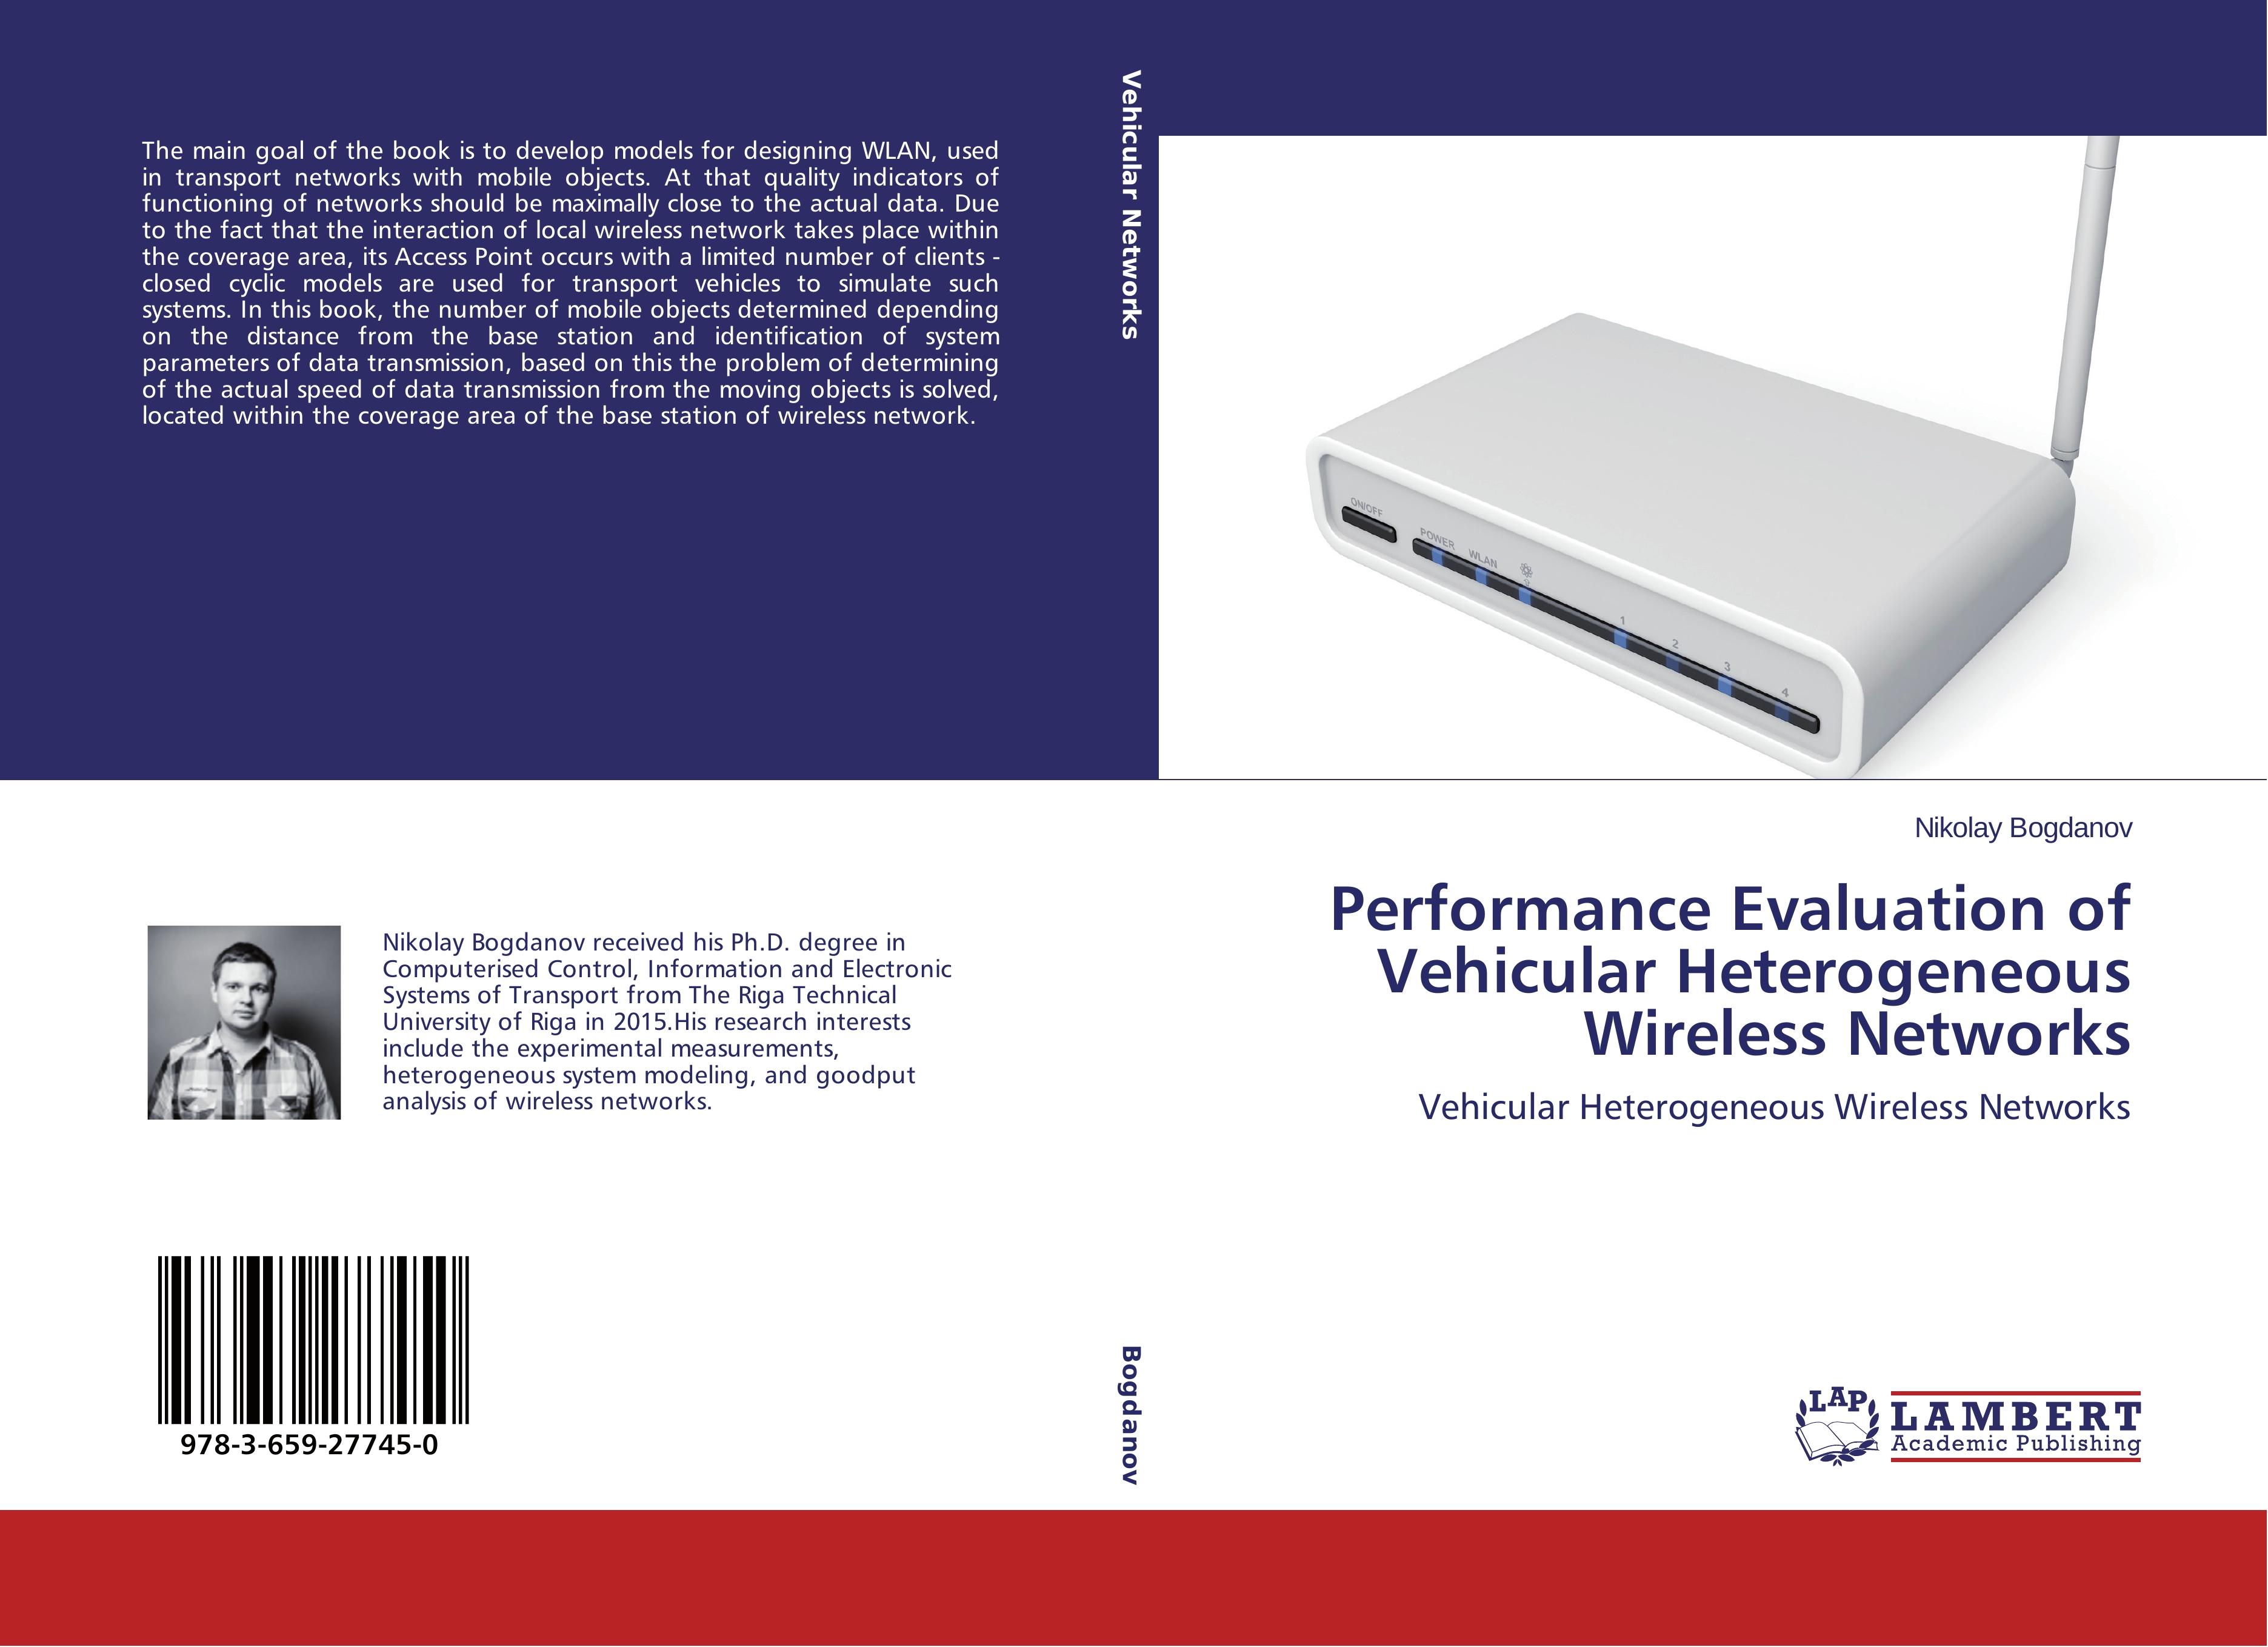 Performance Evaluation of Vehicular Heterogeneous Wireless Networks - Nikolay Bogdanov